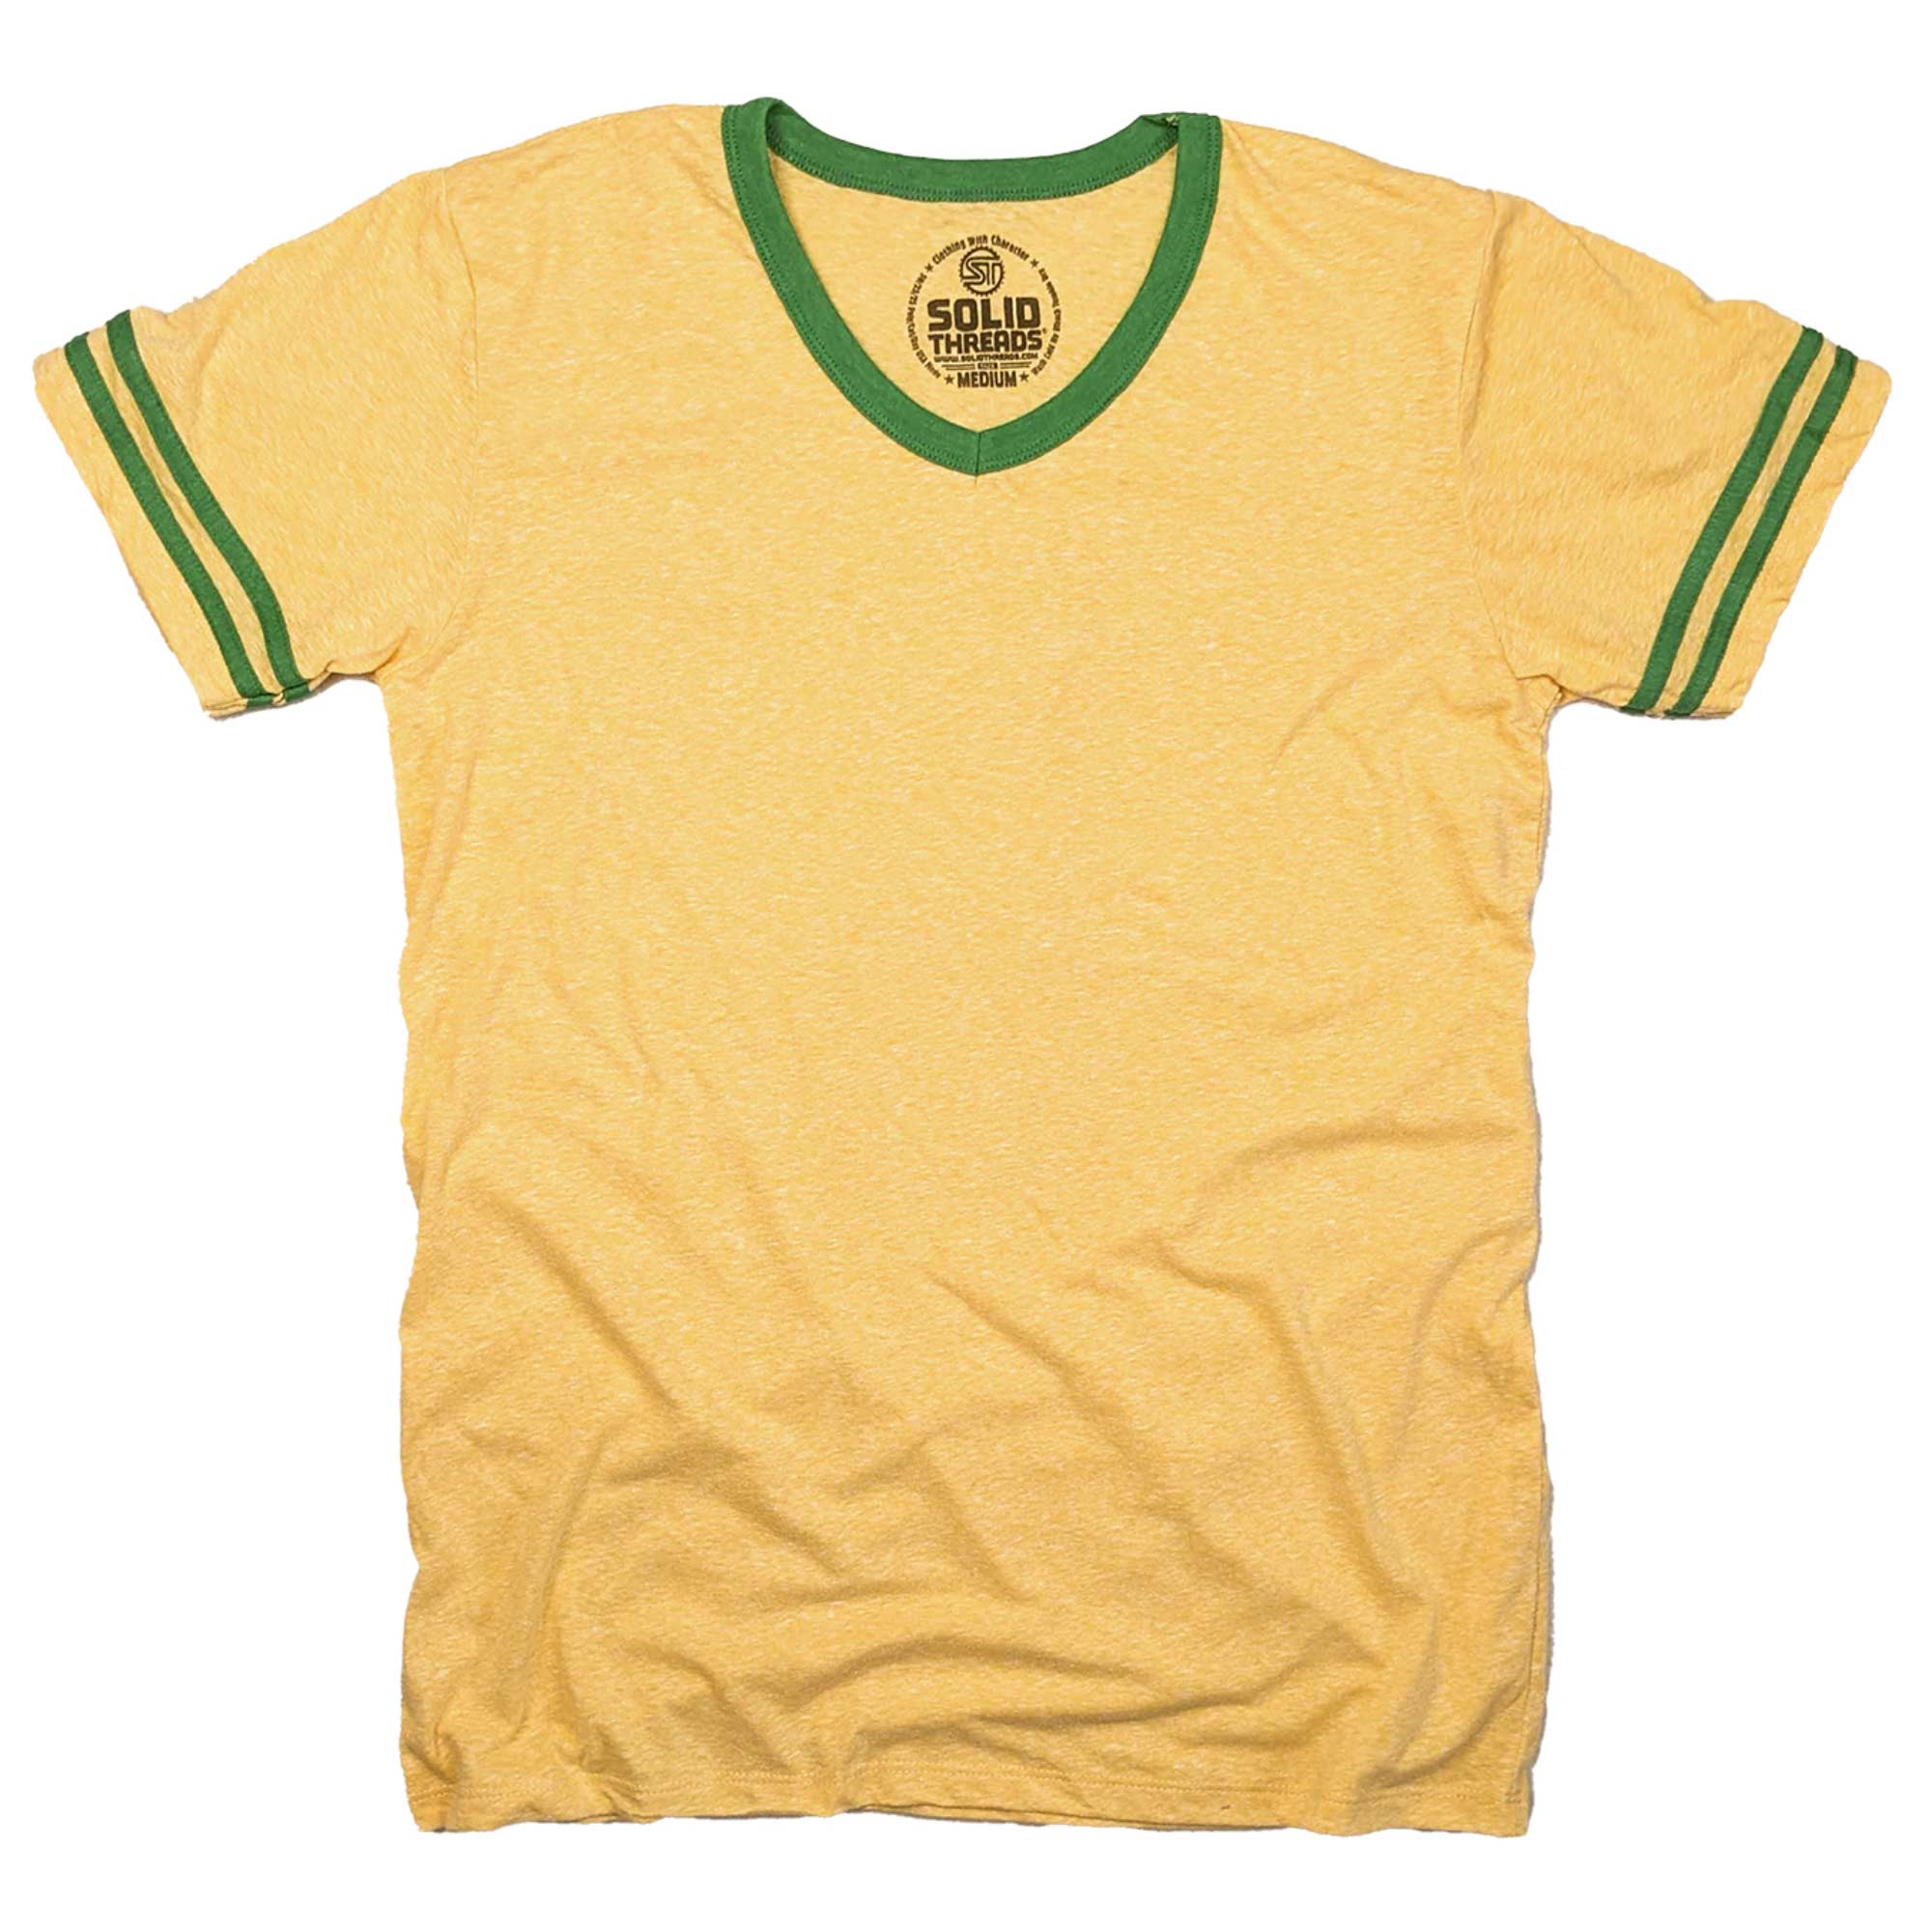 Men's Solid Threads Retro Ringer V-Neck T-shirt | Vintage USA Made Tee